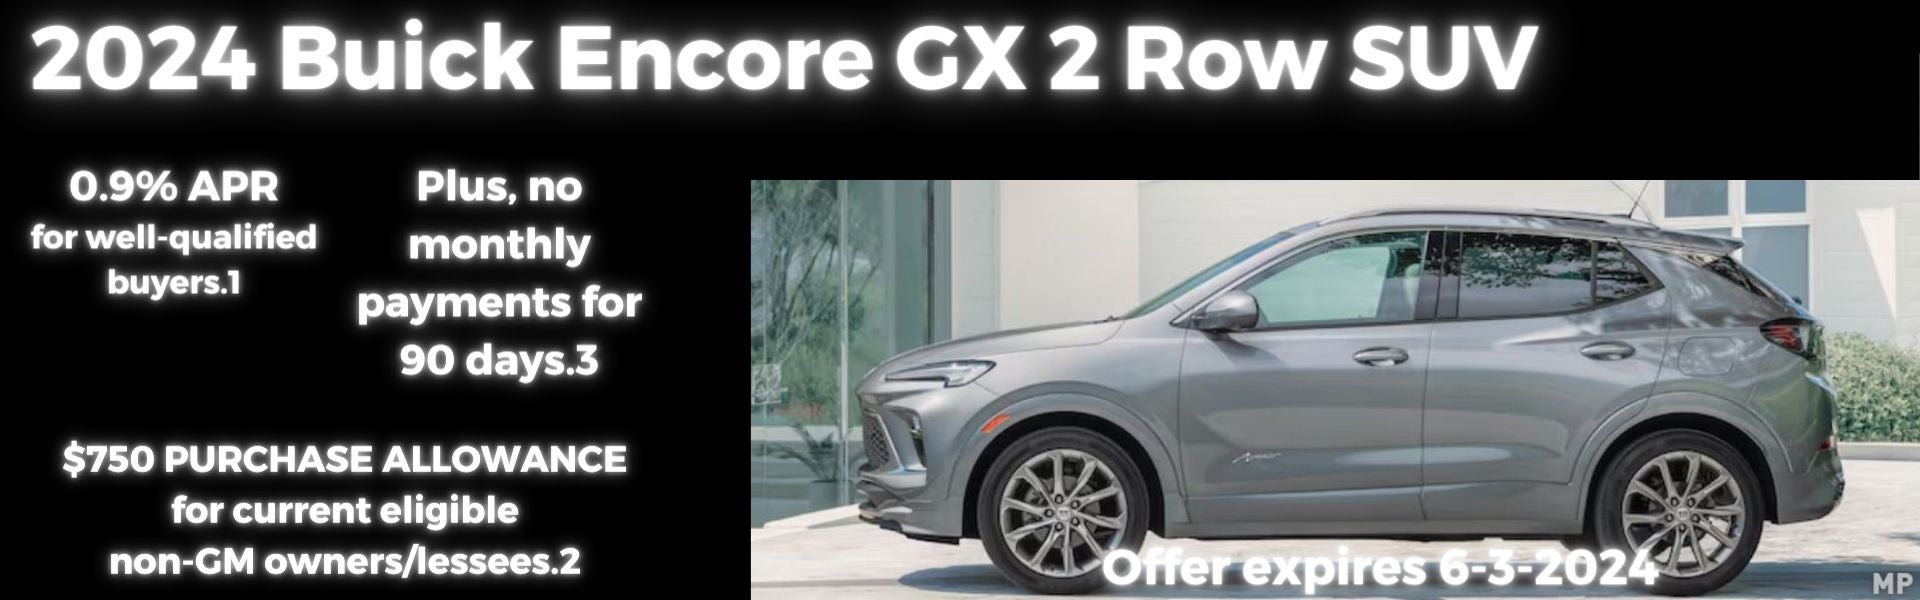 2024 Buick Encore GX offer